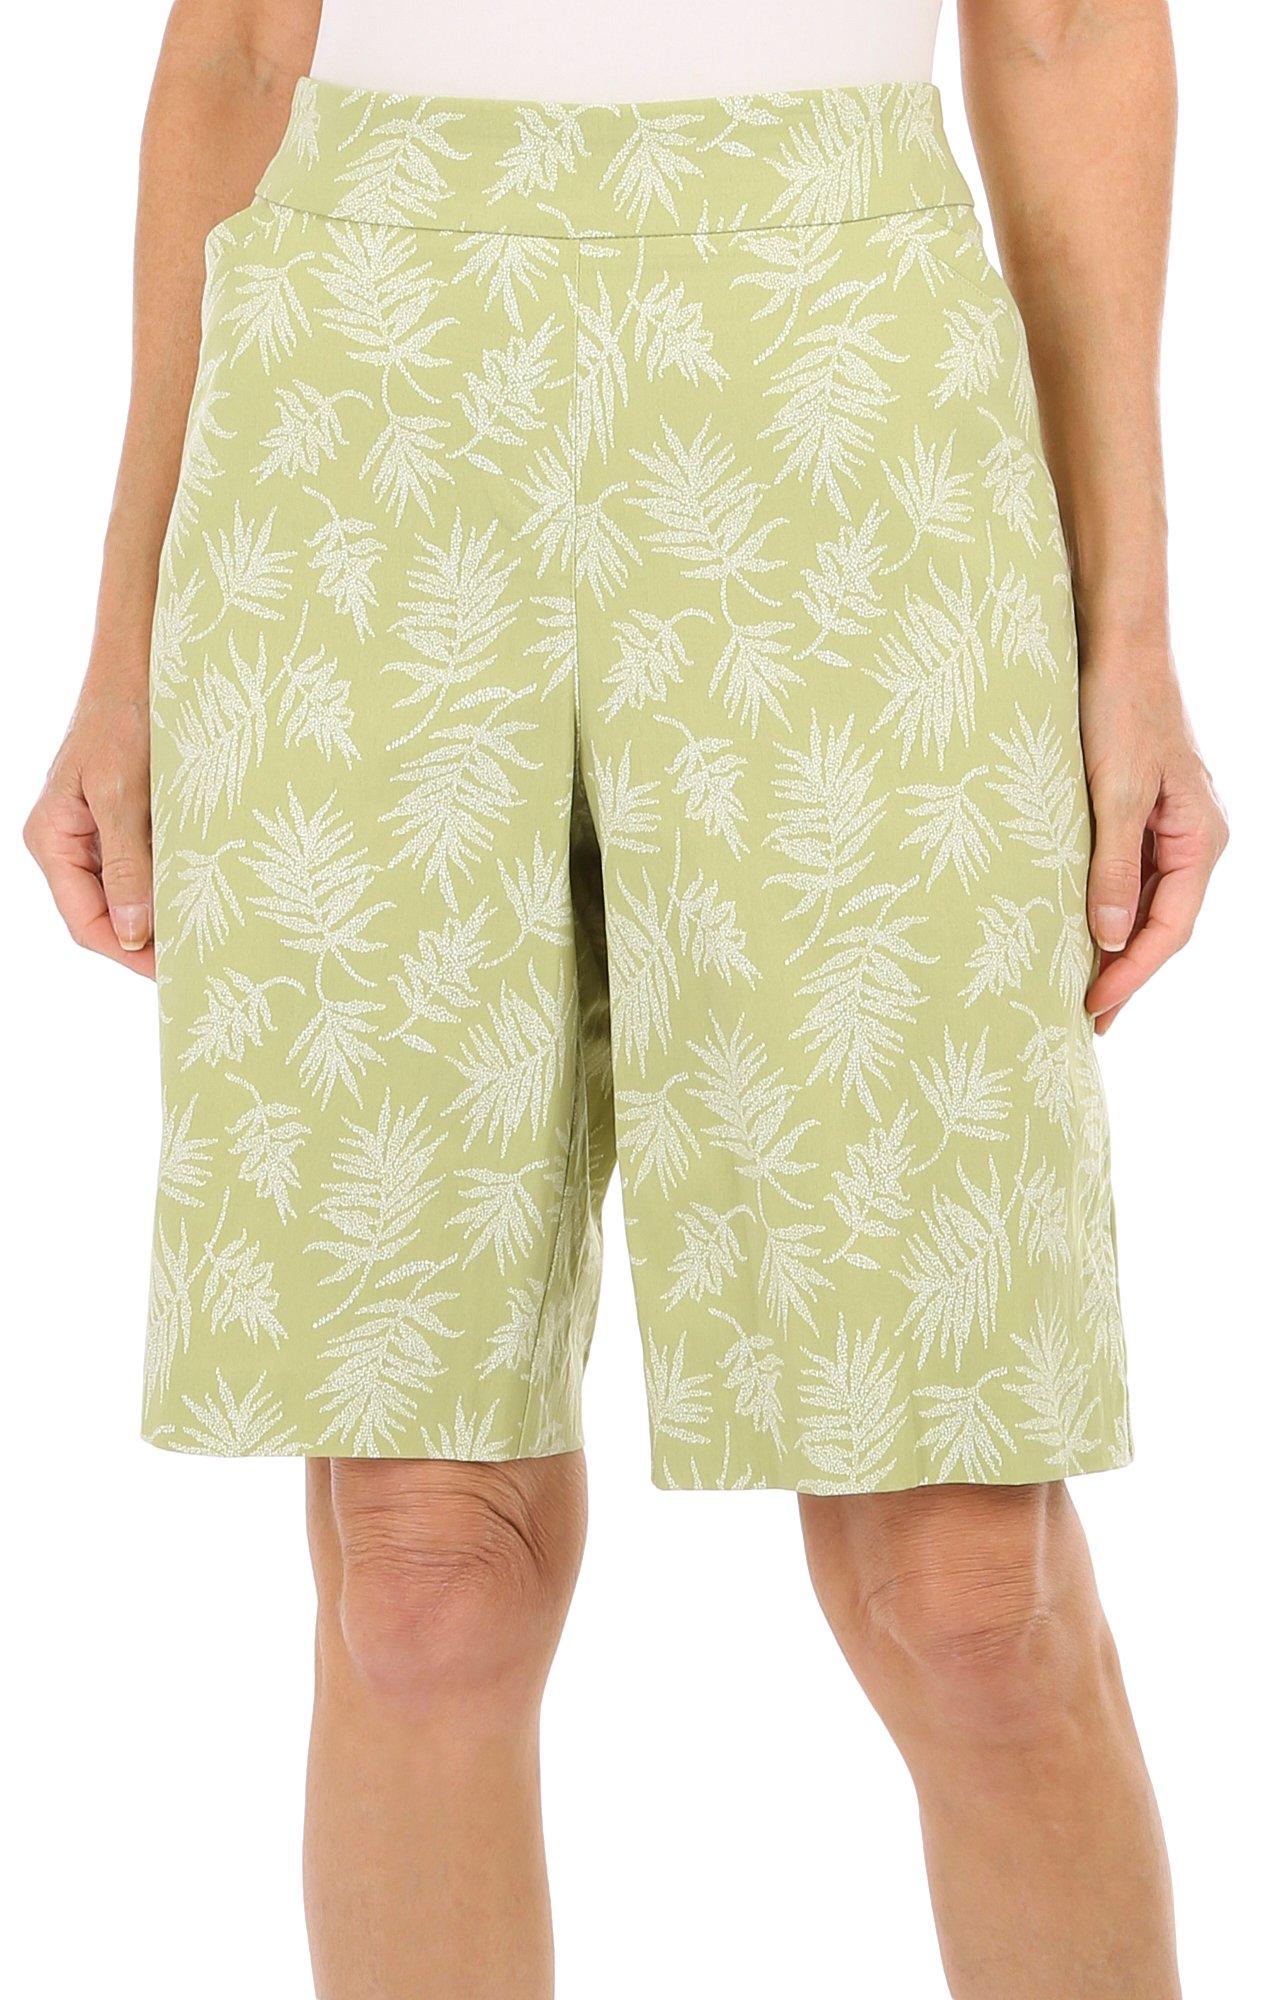 Coral Bay Womens Palm Leaf Print Shorts